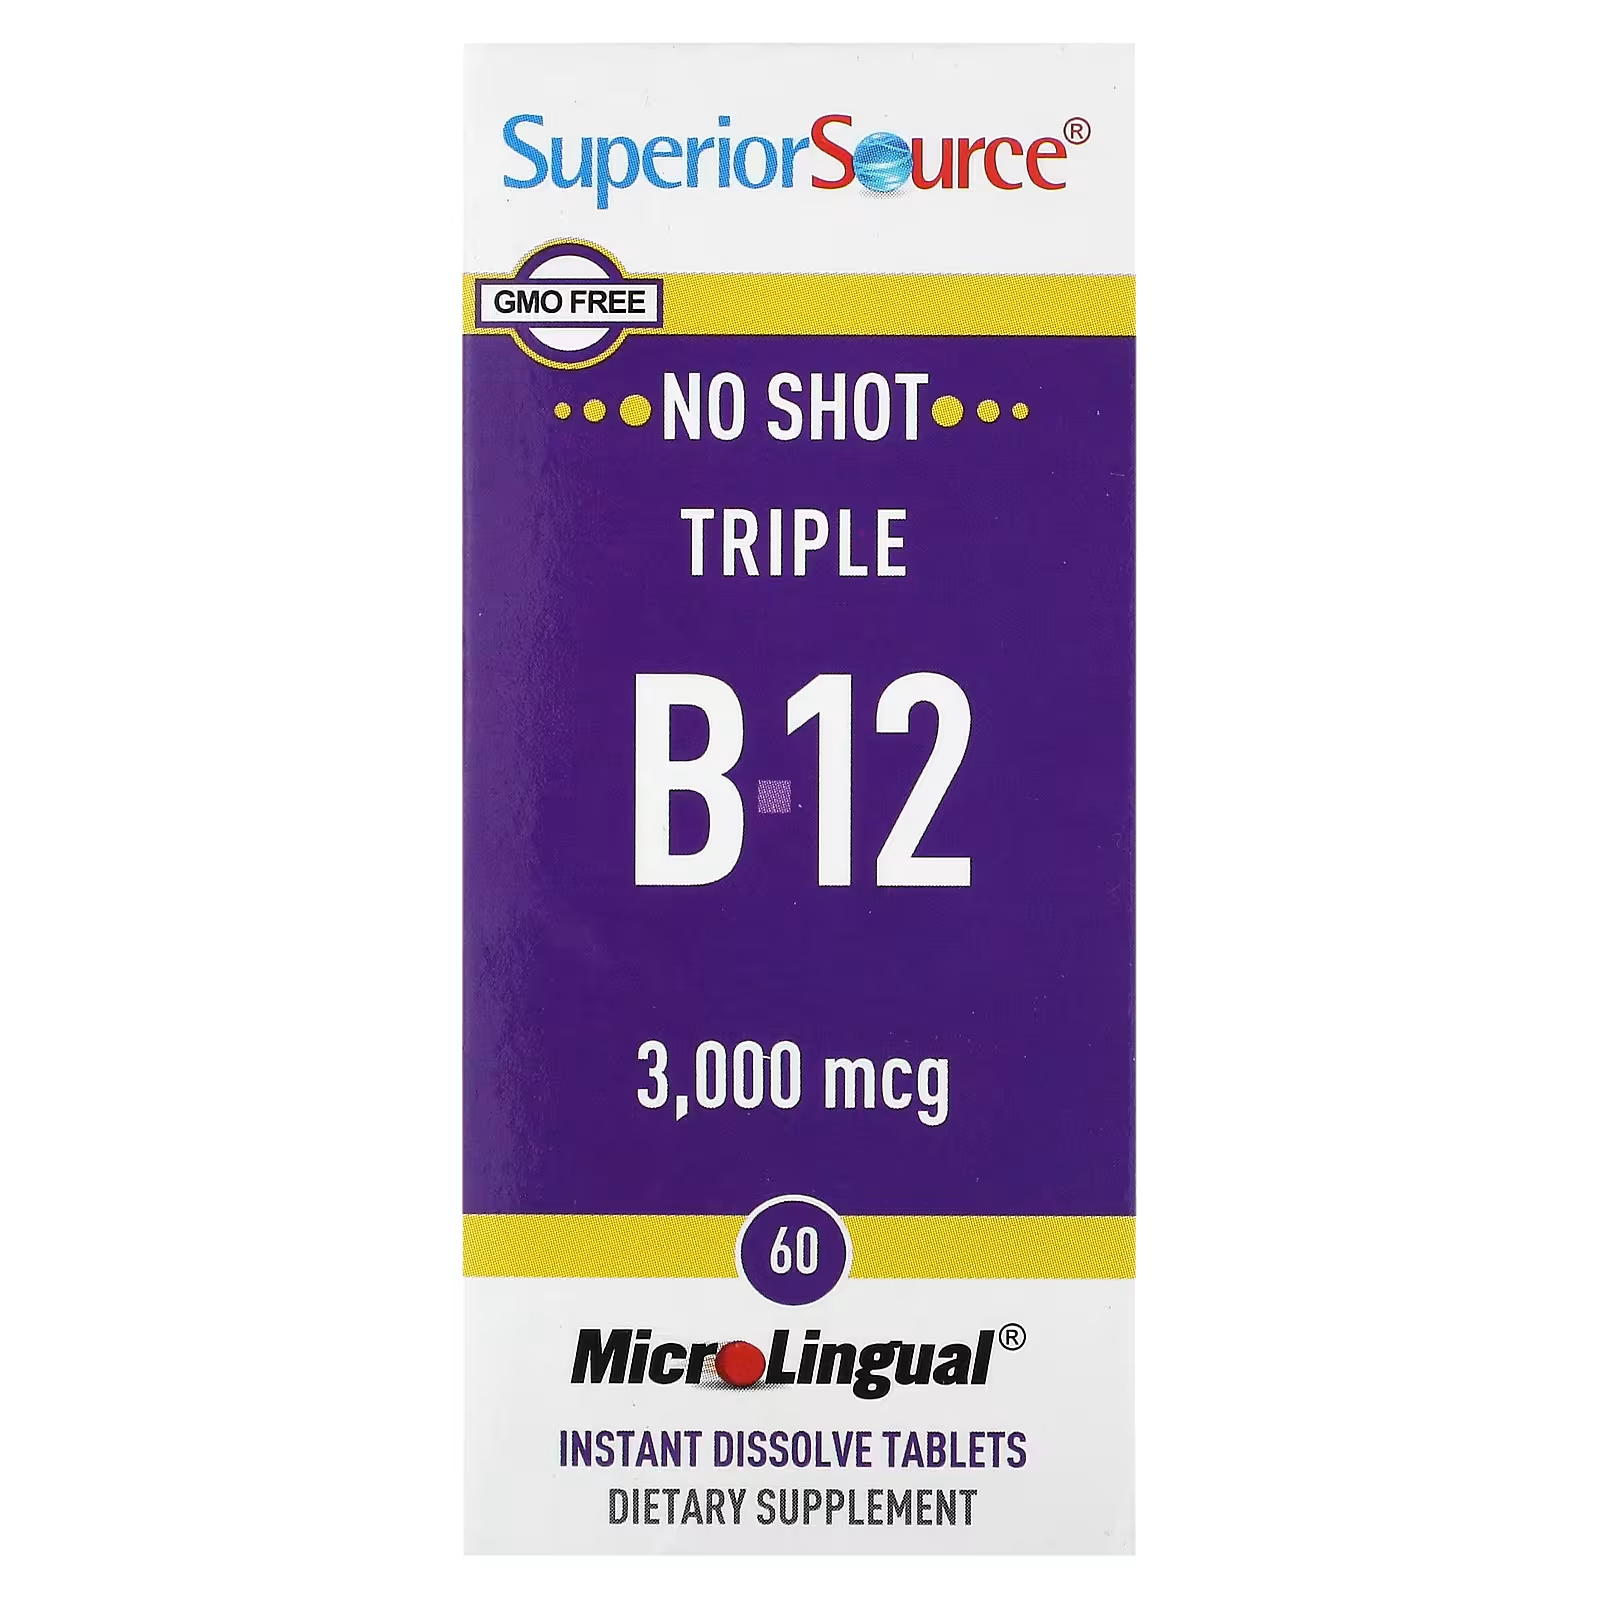 Пищевая добавка MicroLingual Superior Source Triple B-12, 60 растворяющихся таблеток метилкобаламин b 12 superior source 90 растворяющихся таблеток